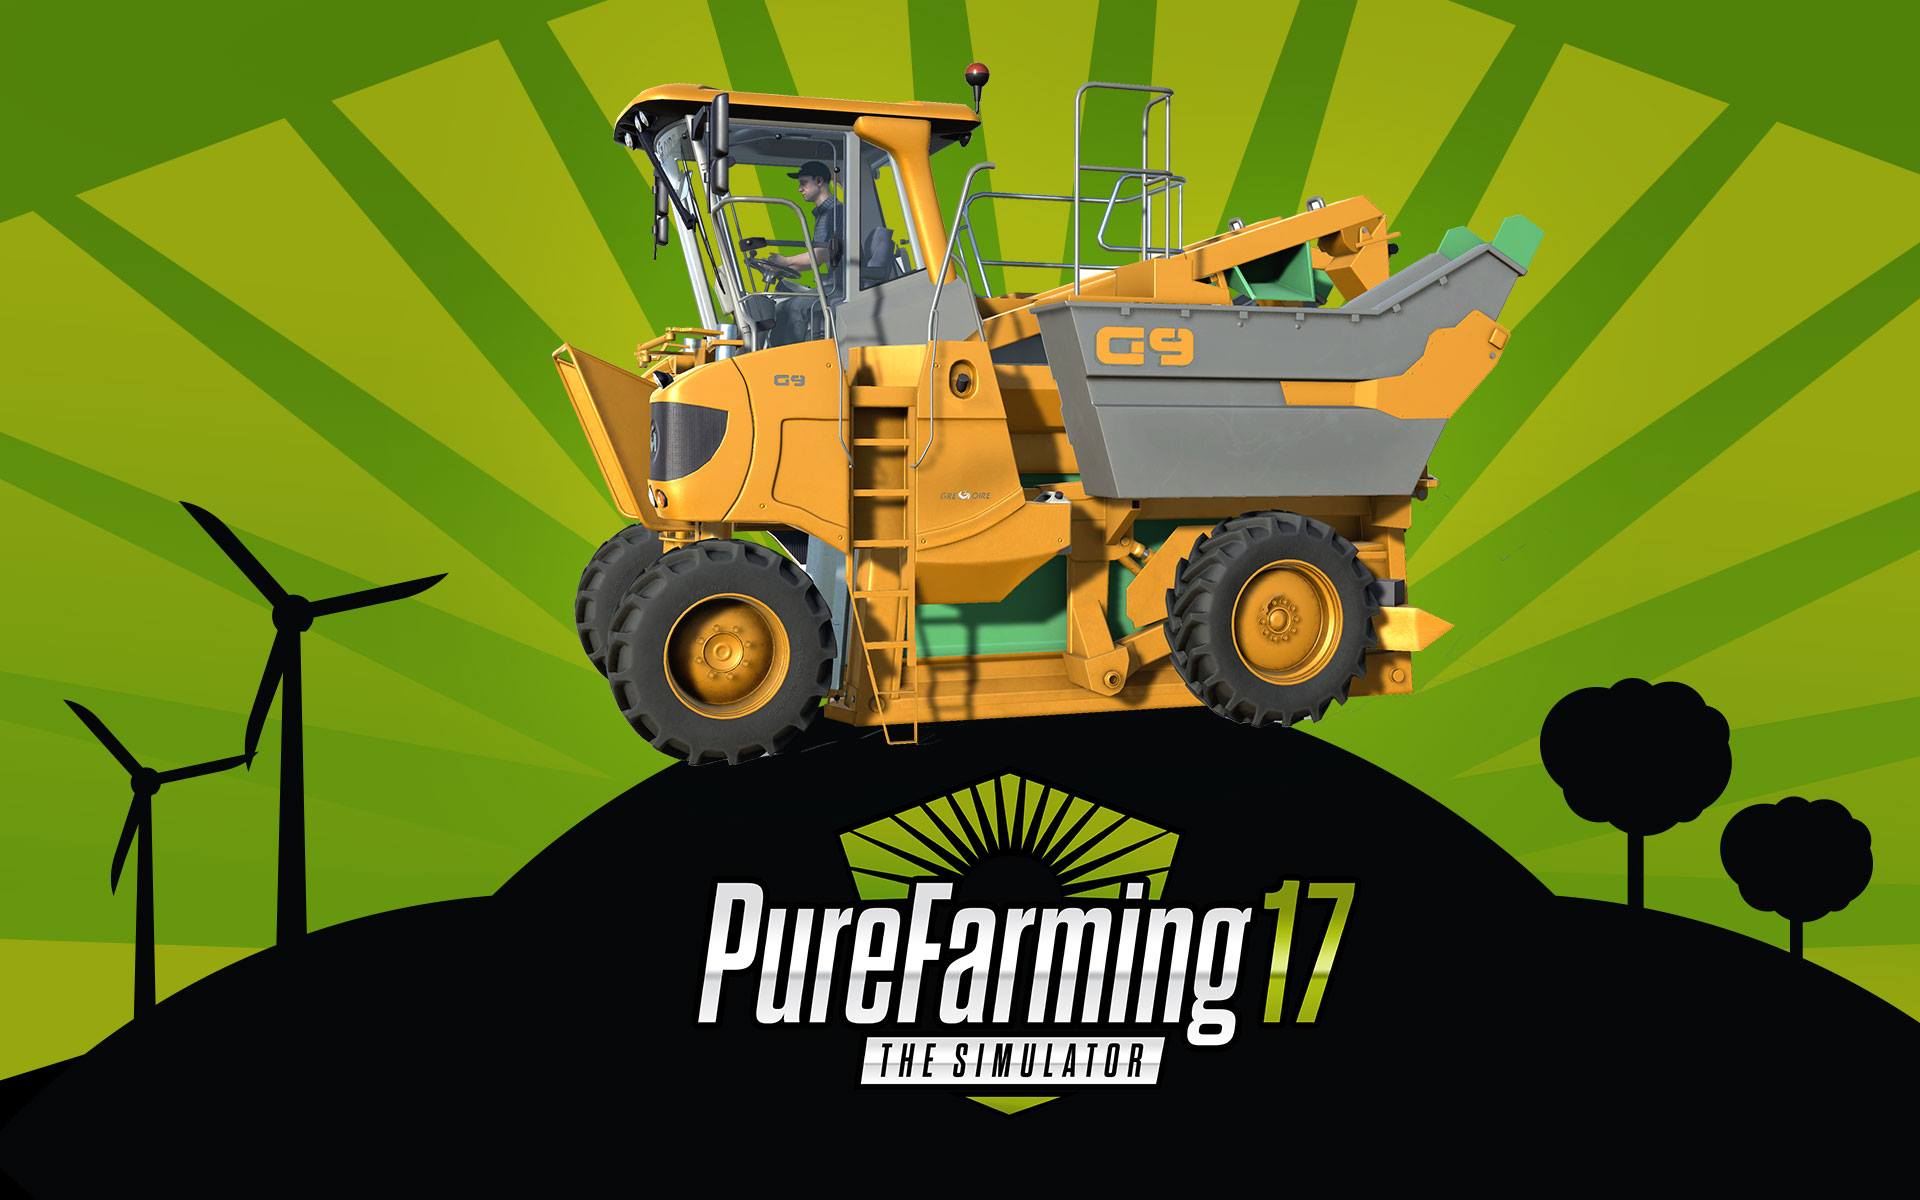 PureFarming-17-The-Simulator-Gregoire G9